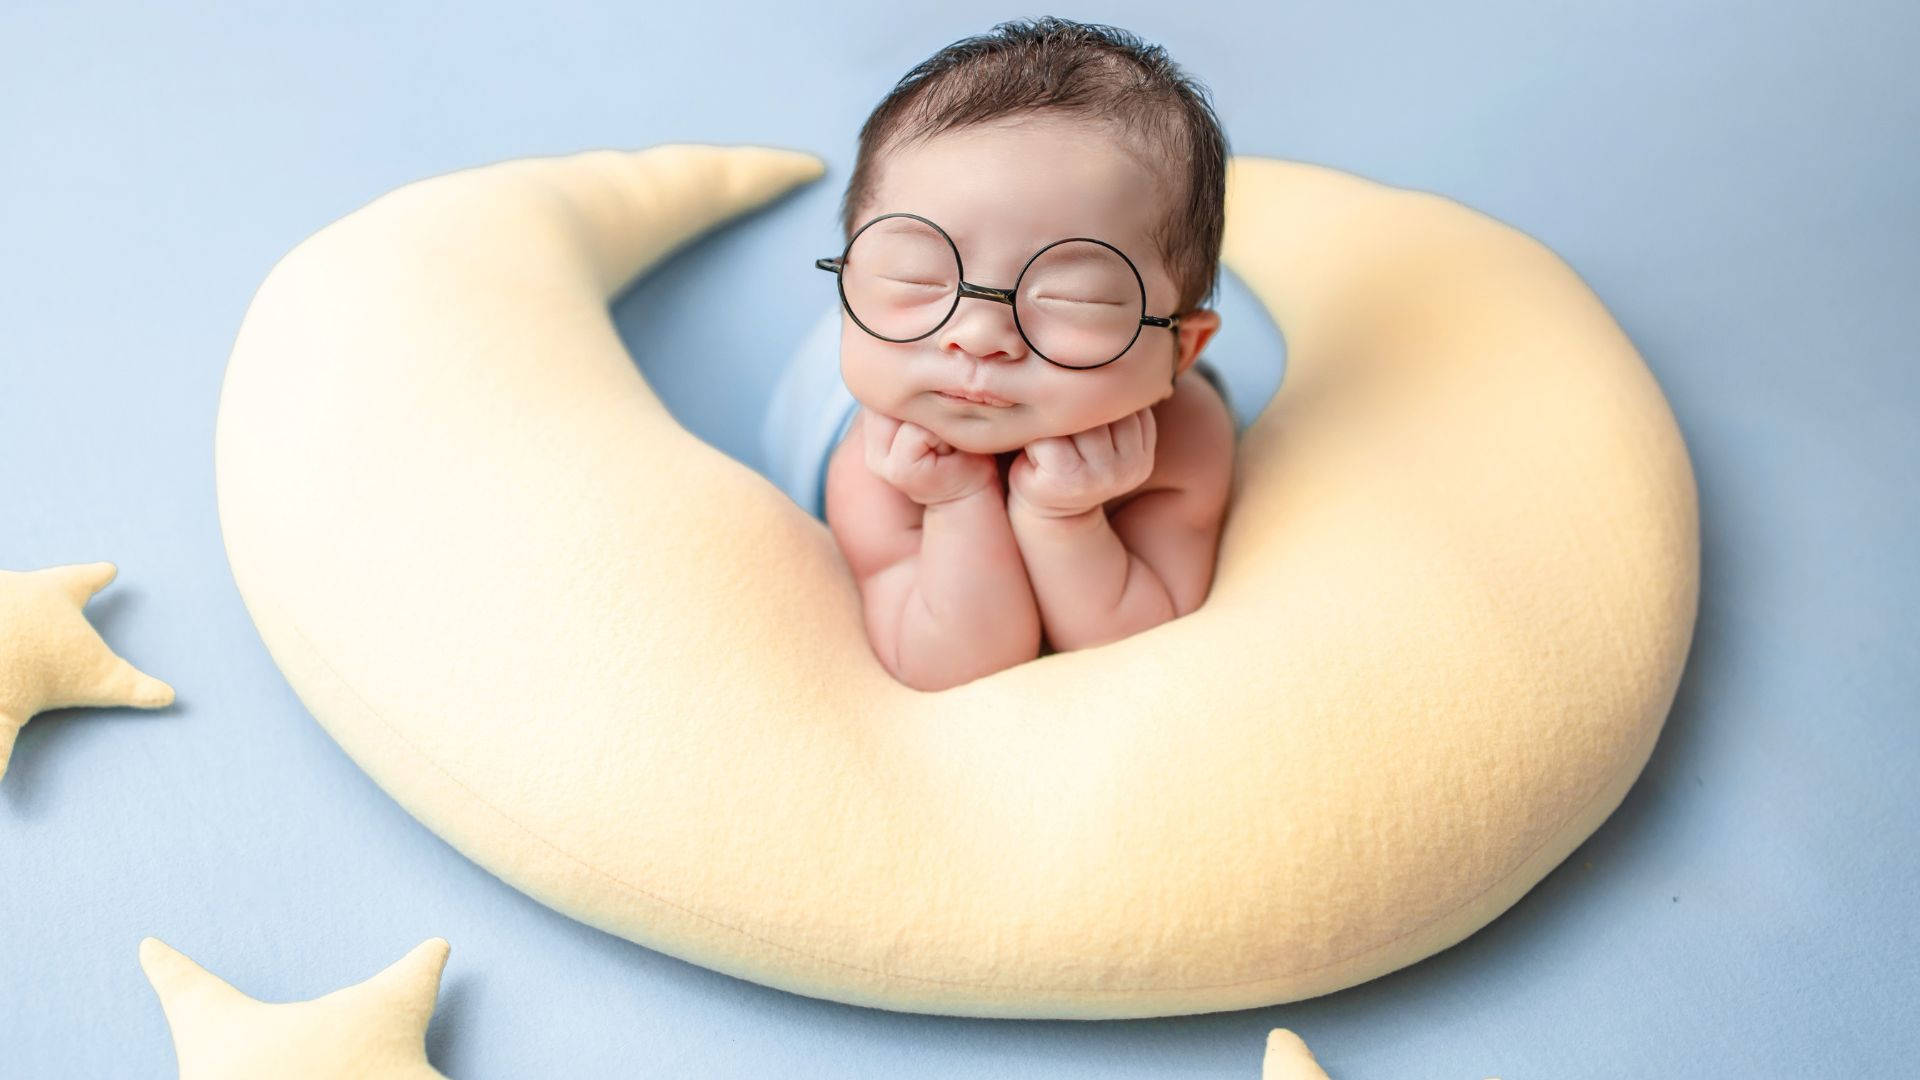 Baby Photography Newborn Wearing Eyeglass Wallpaper